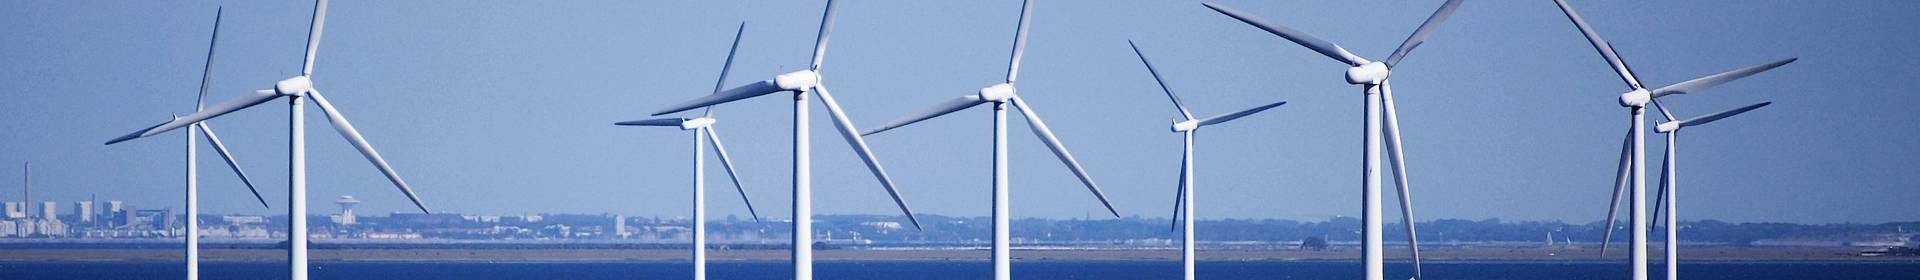 Sea based wind farm